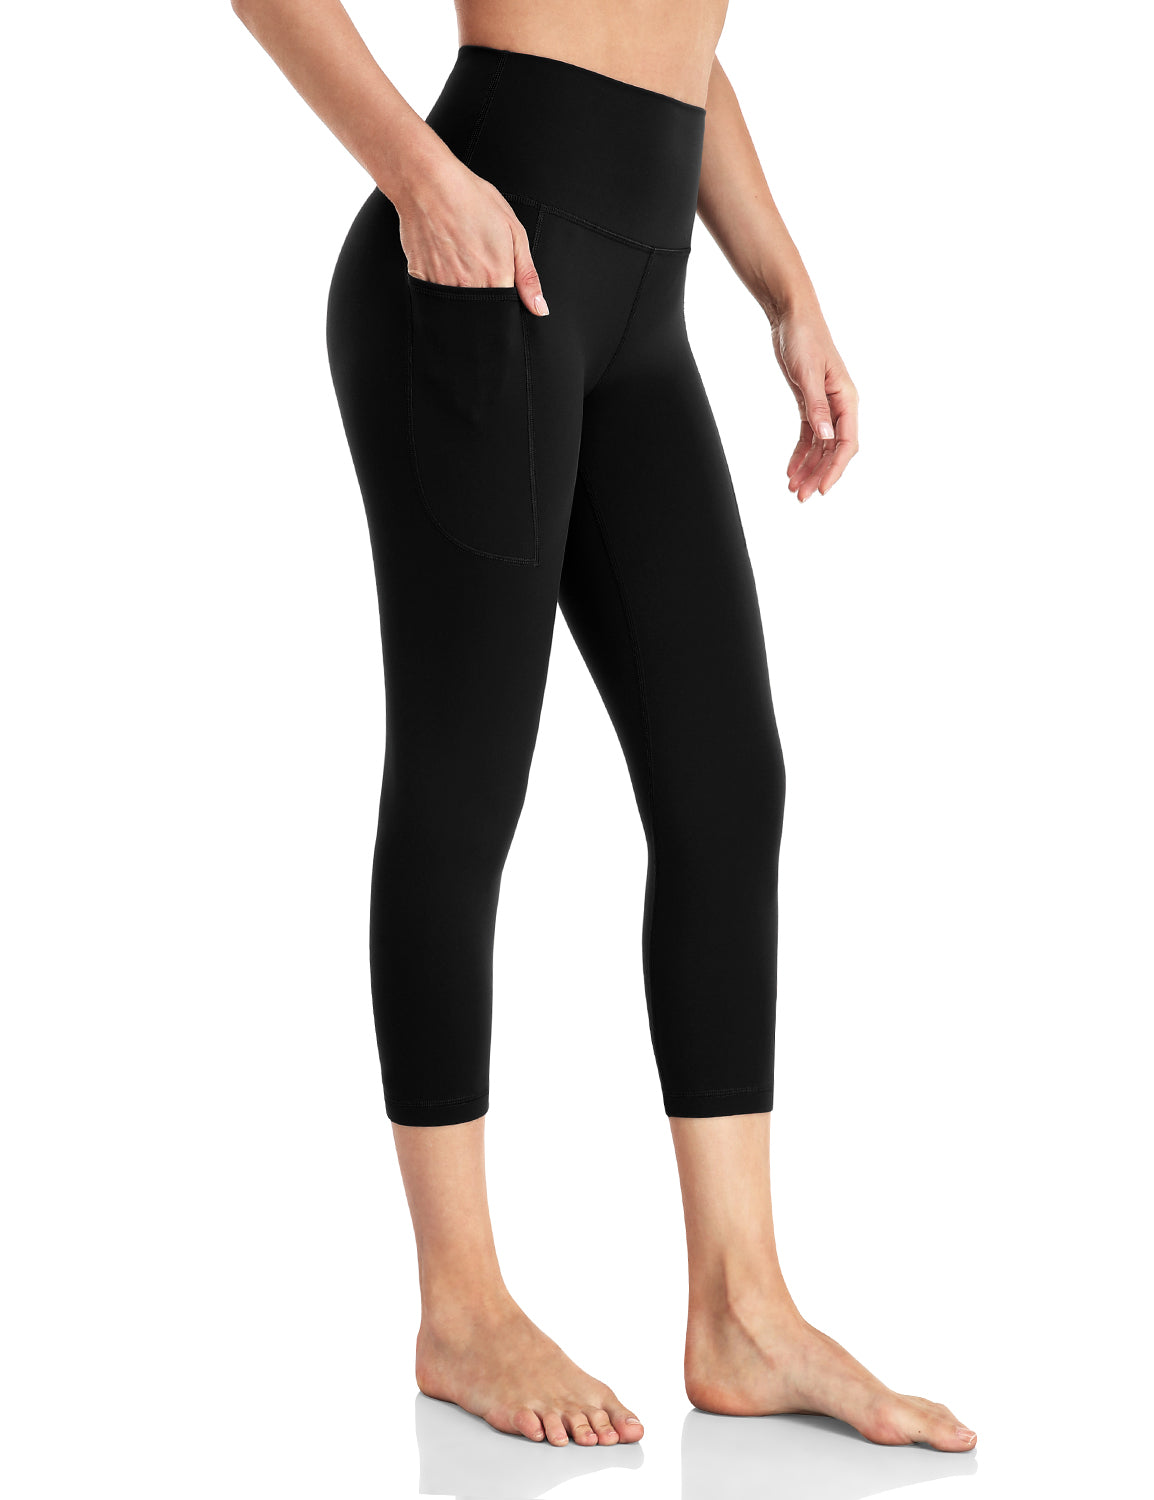 HeyNuts Essential Yoga Capris Leggings With Side Pockets 21